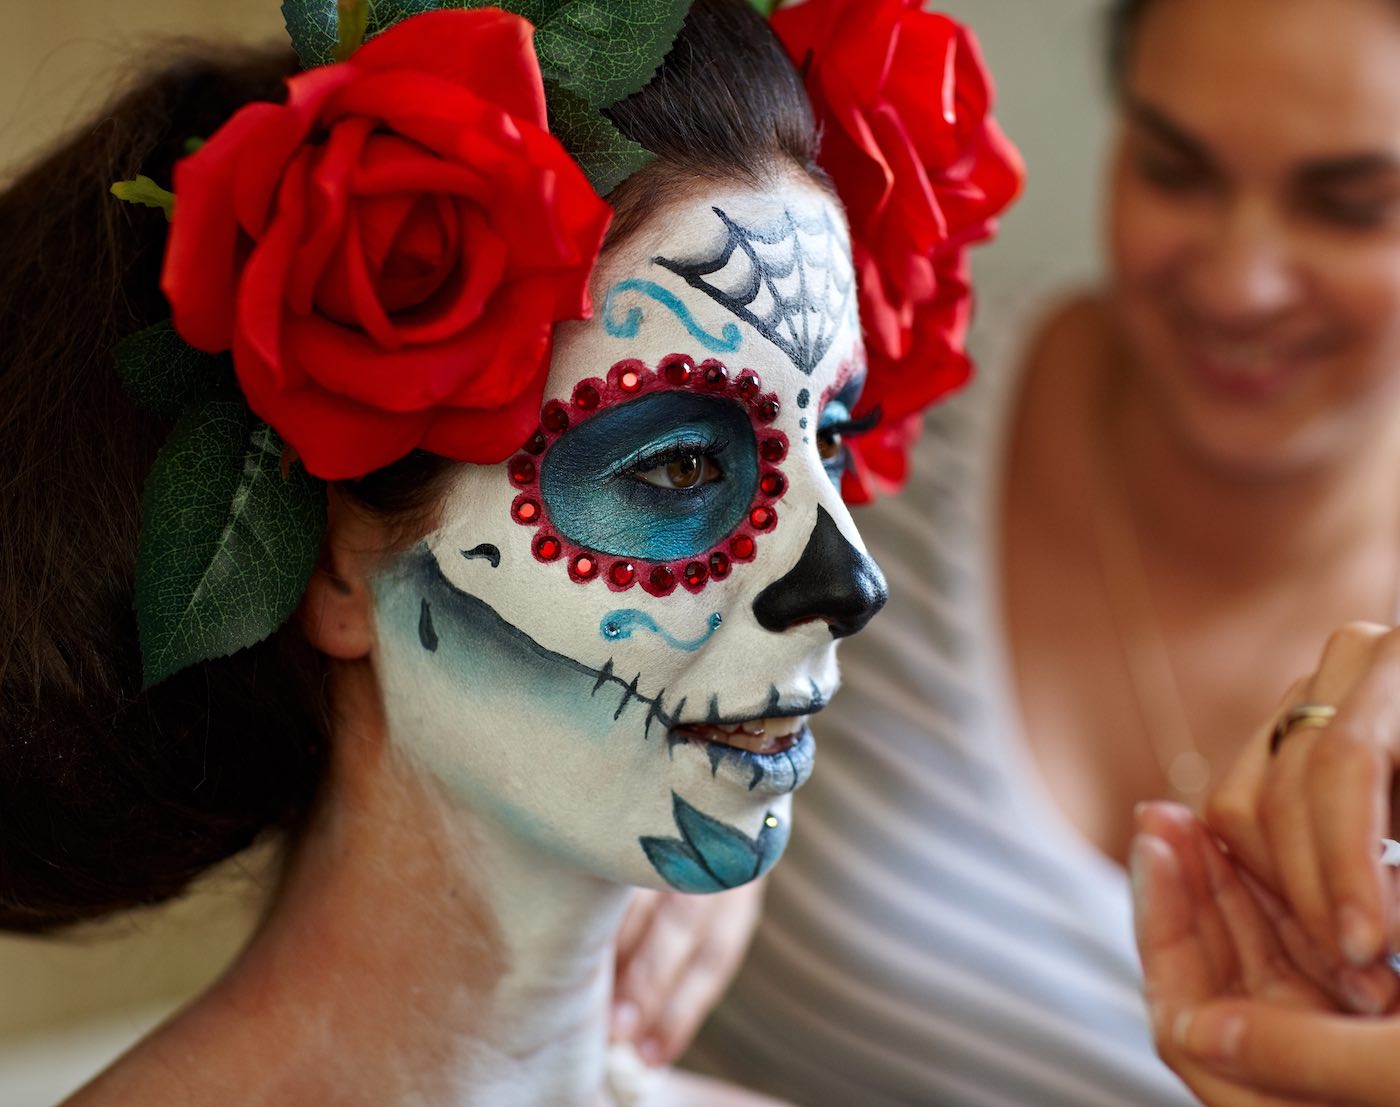 Makeup artists in work making a Halloween makeup - mexican Santa Muerte mask.